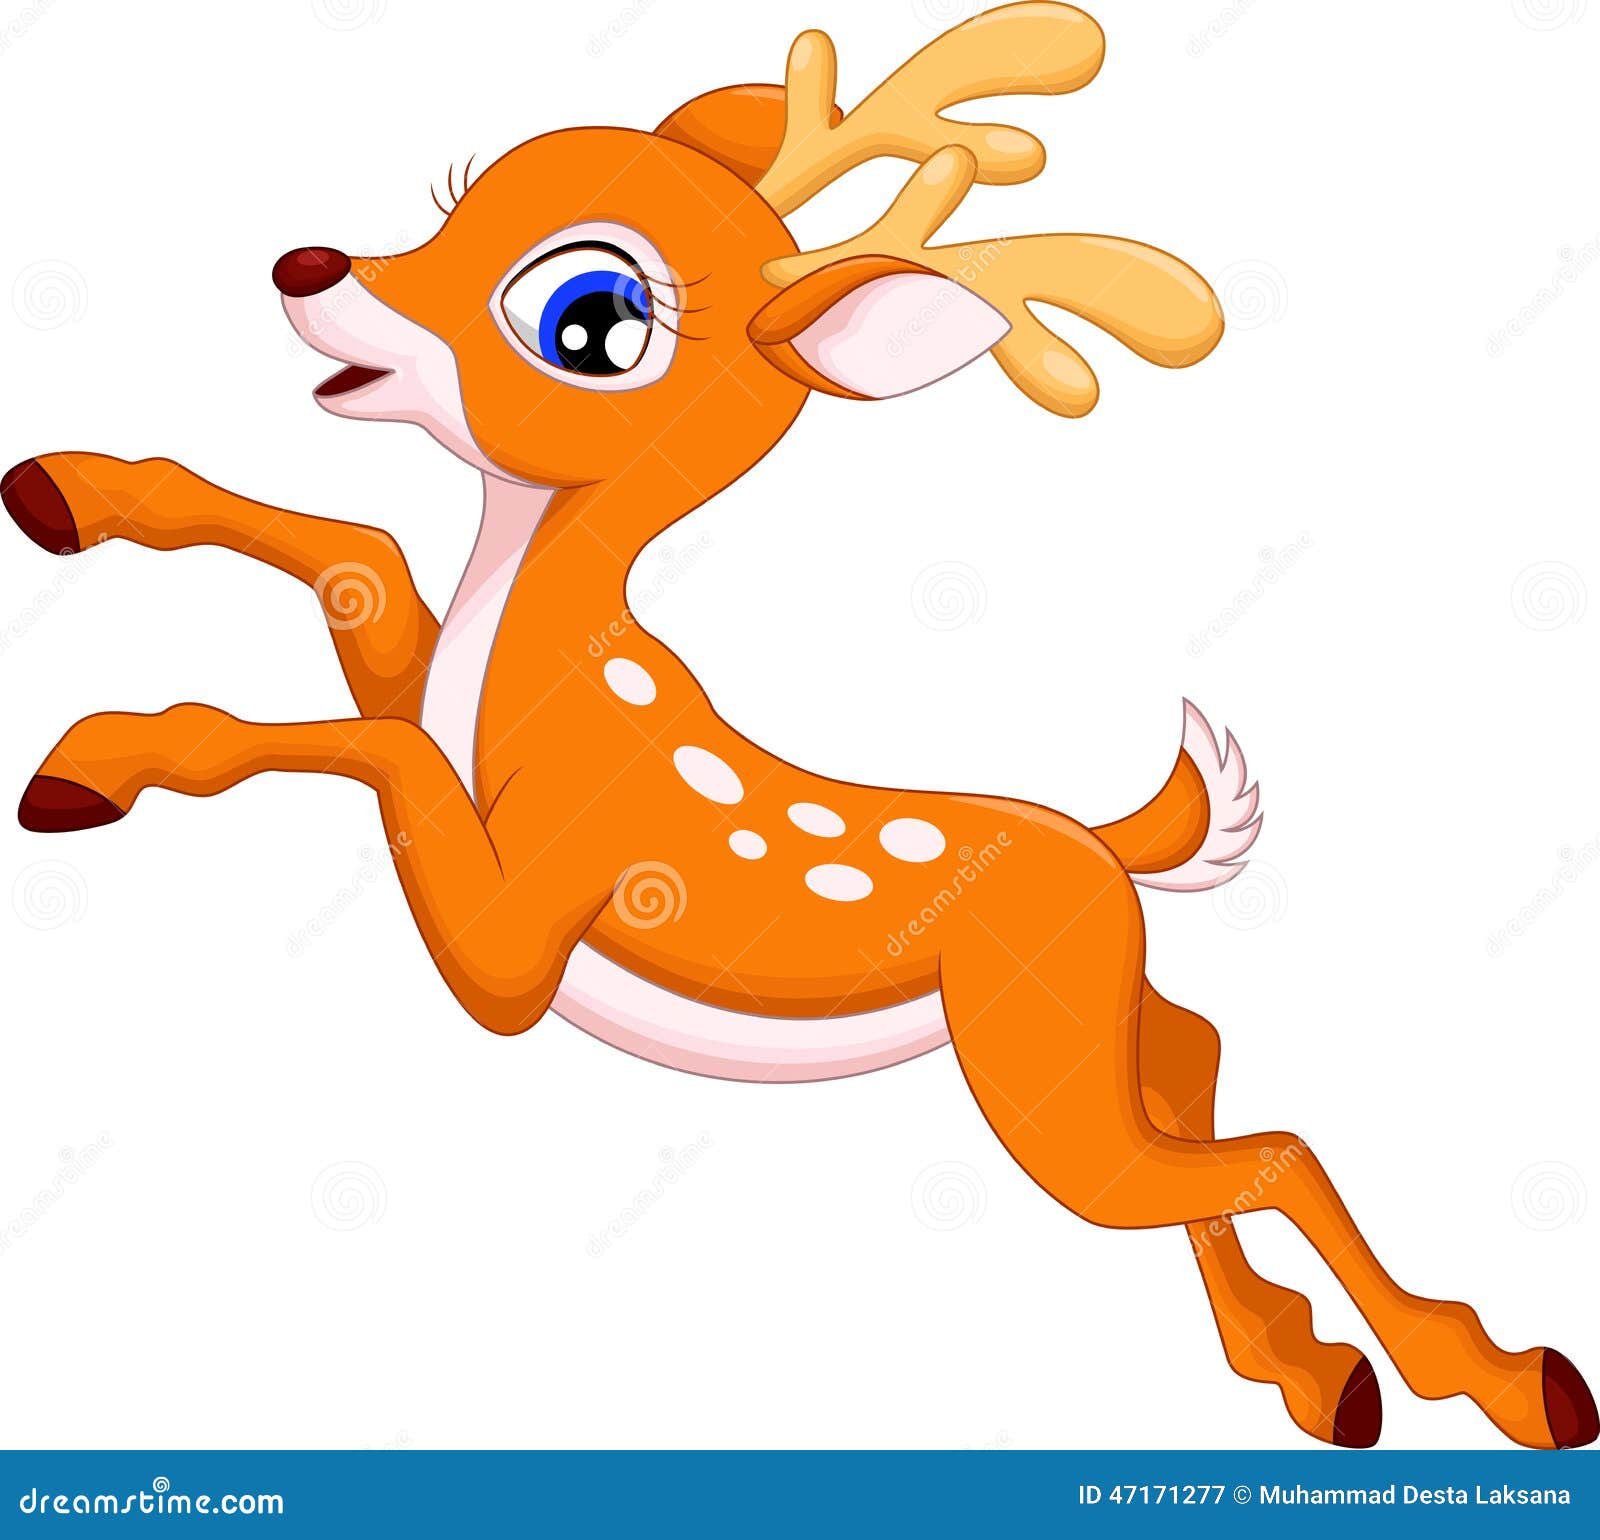 Cute Deer Cartoon Illustration 47171277 - Megapixl